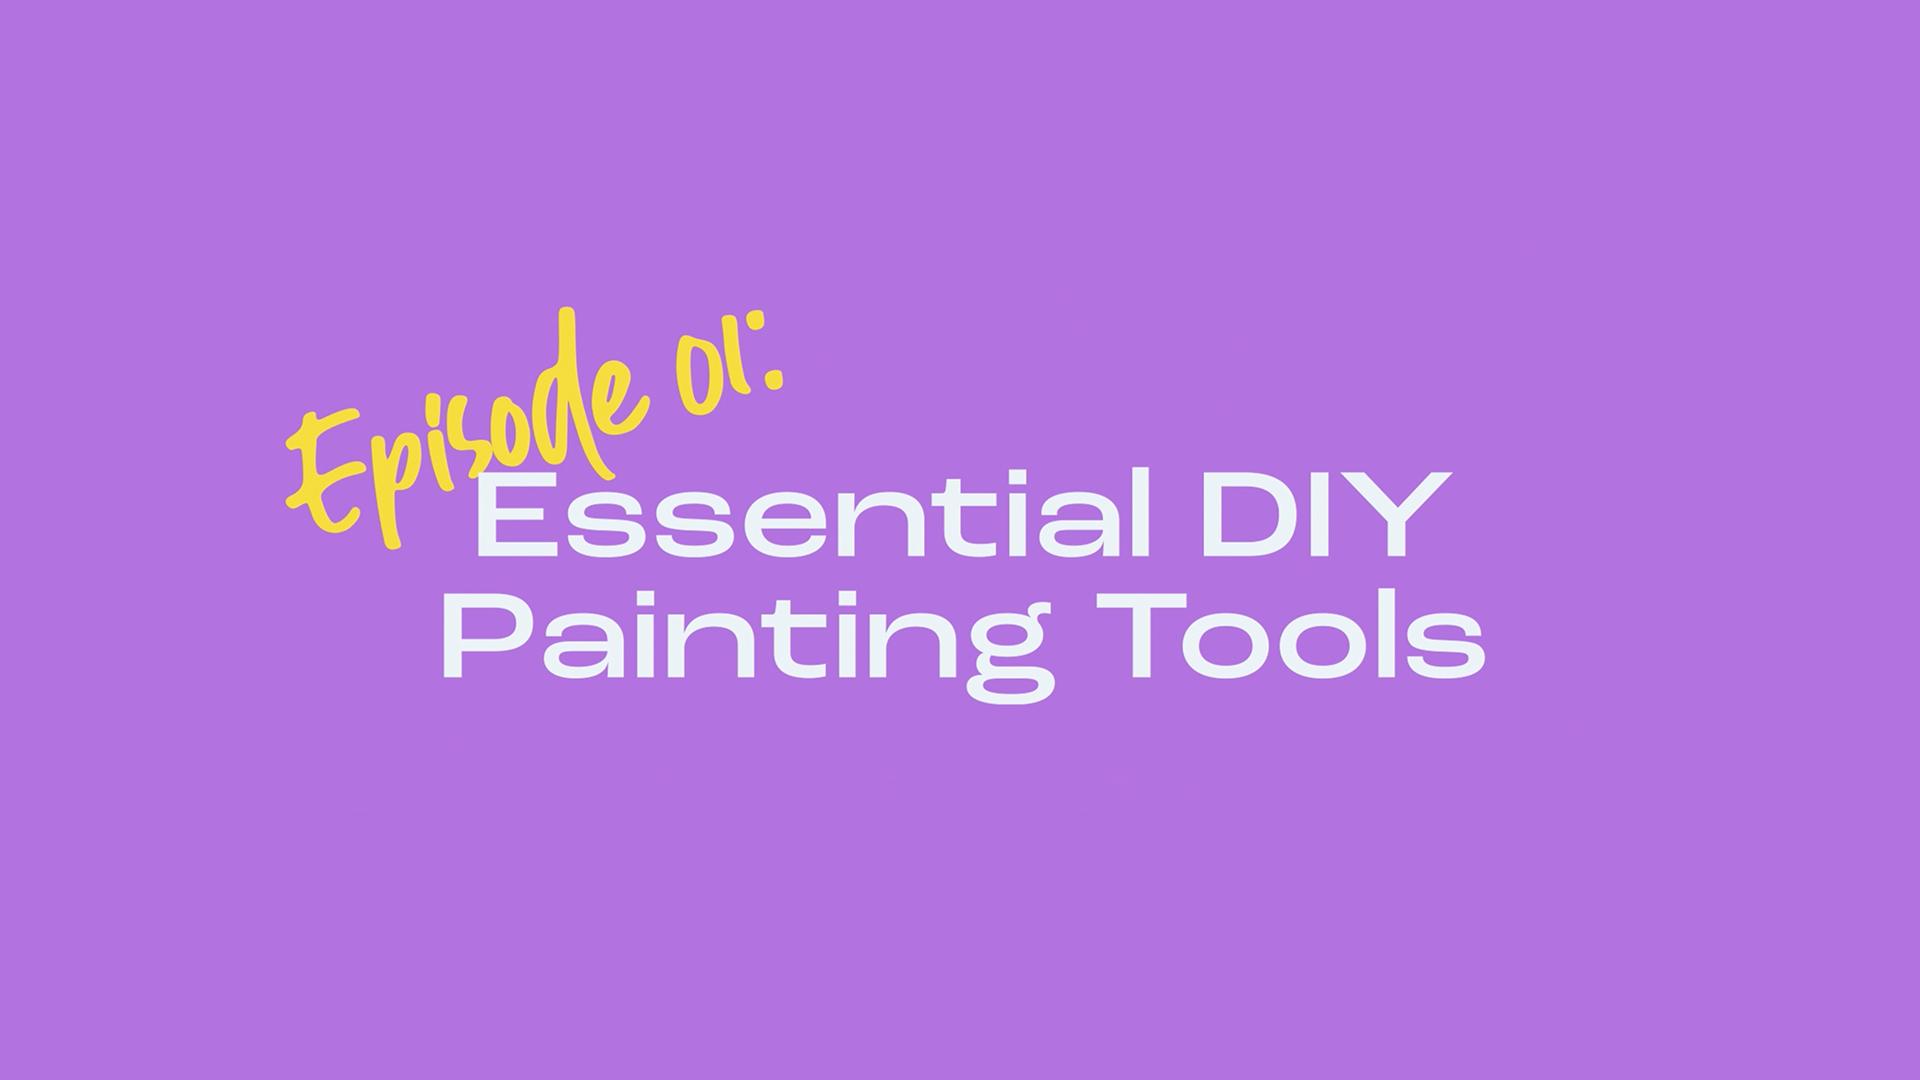 Painting It Easy
Essential DIY Painting Tools